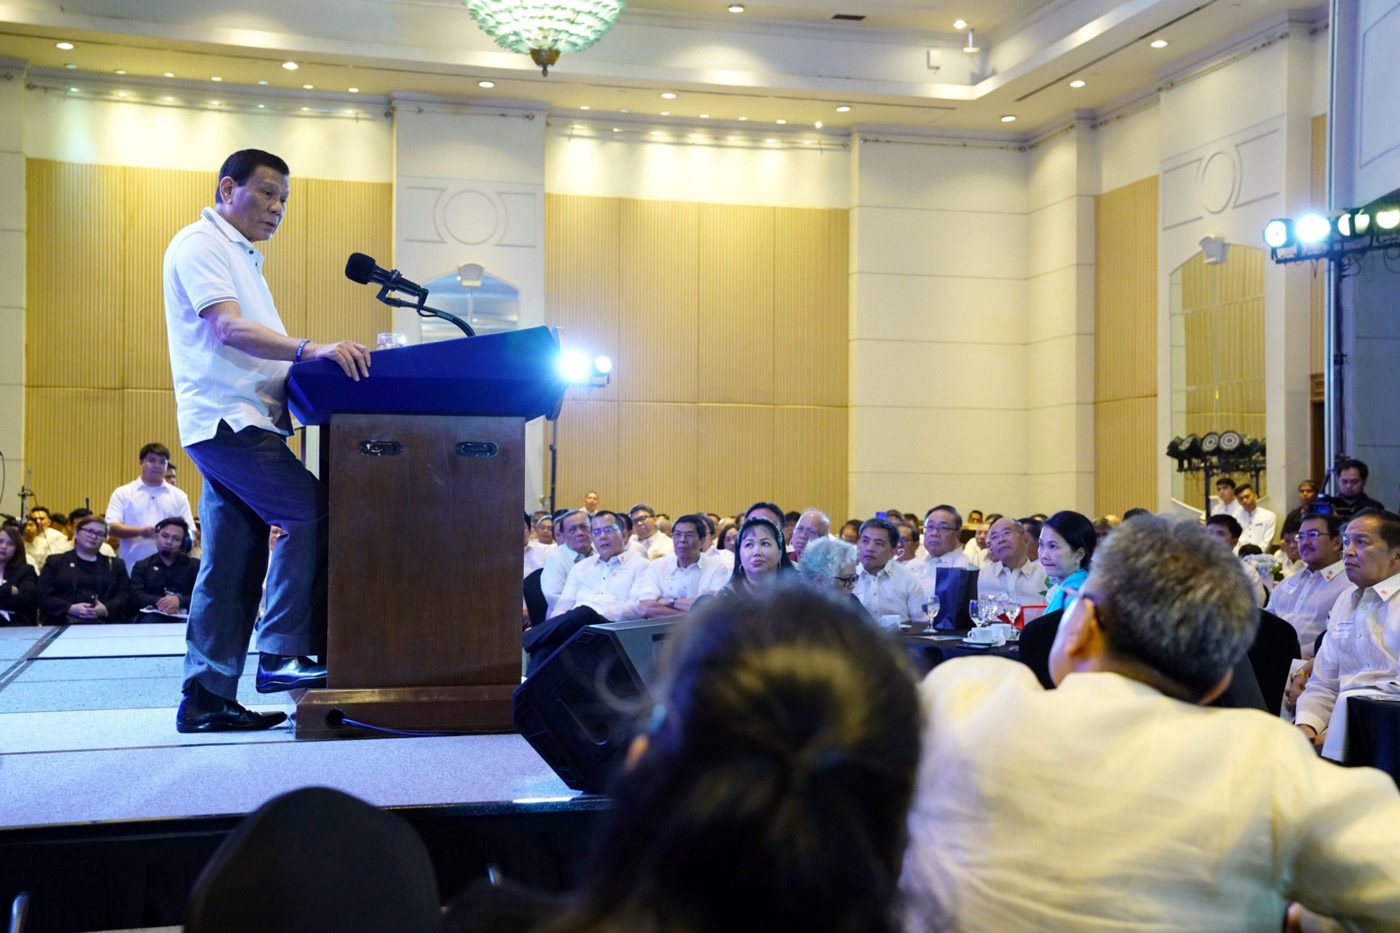 Amid rumor of Duterte coma, Malacañang insists no need for medical bulletins